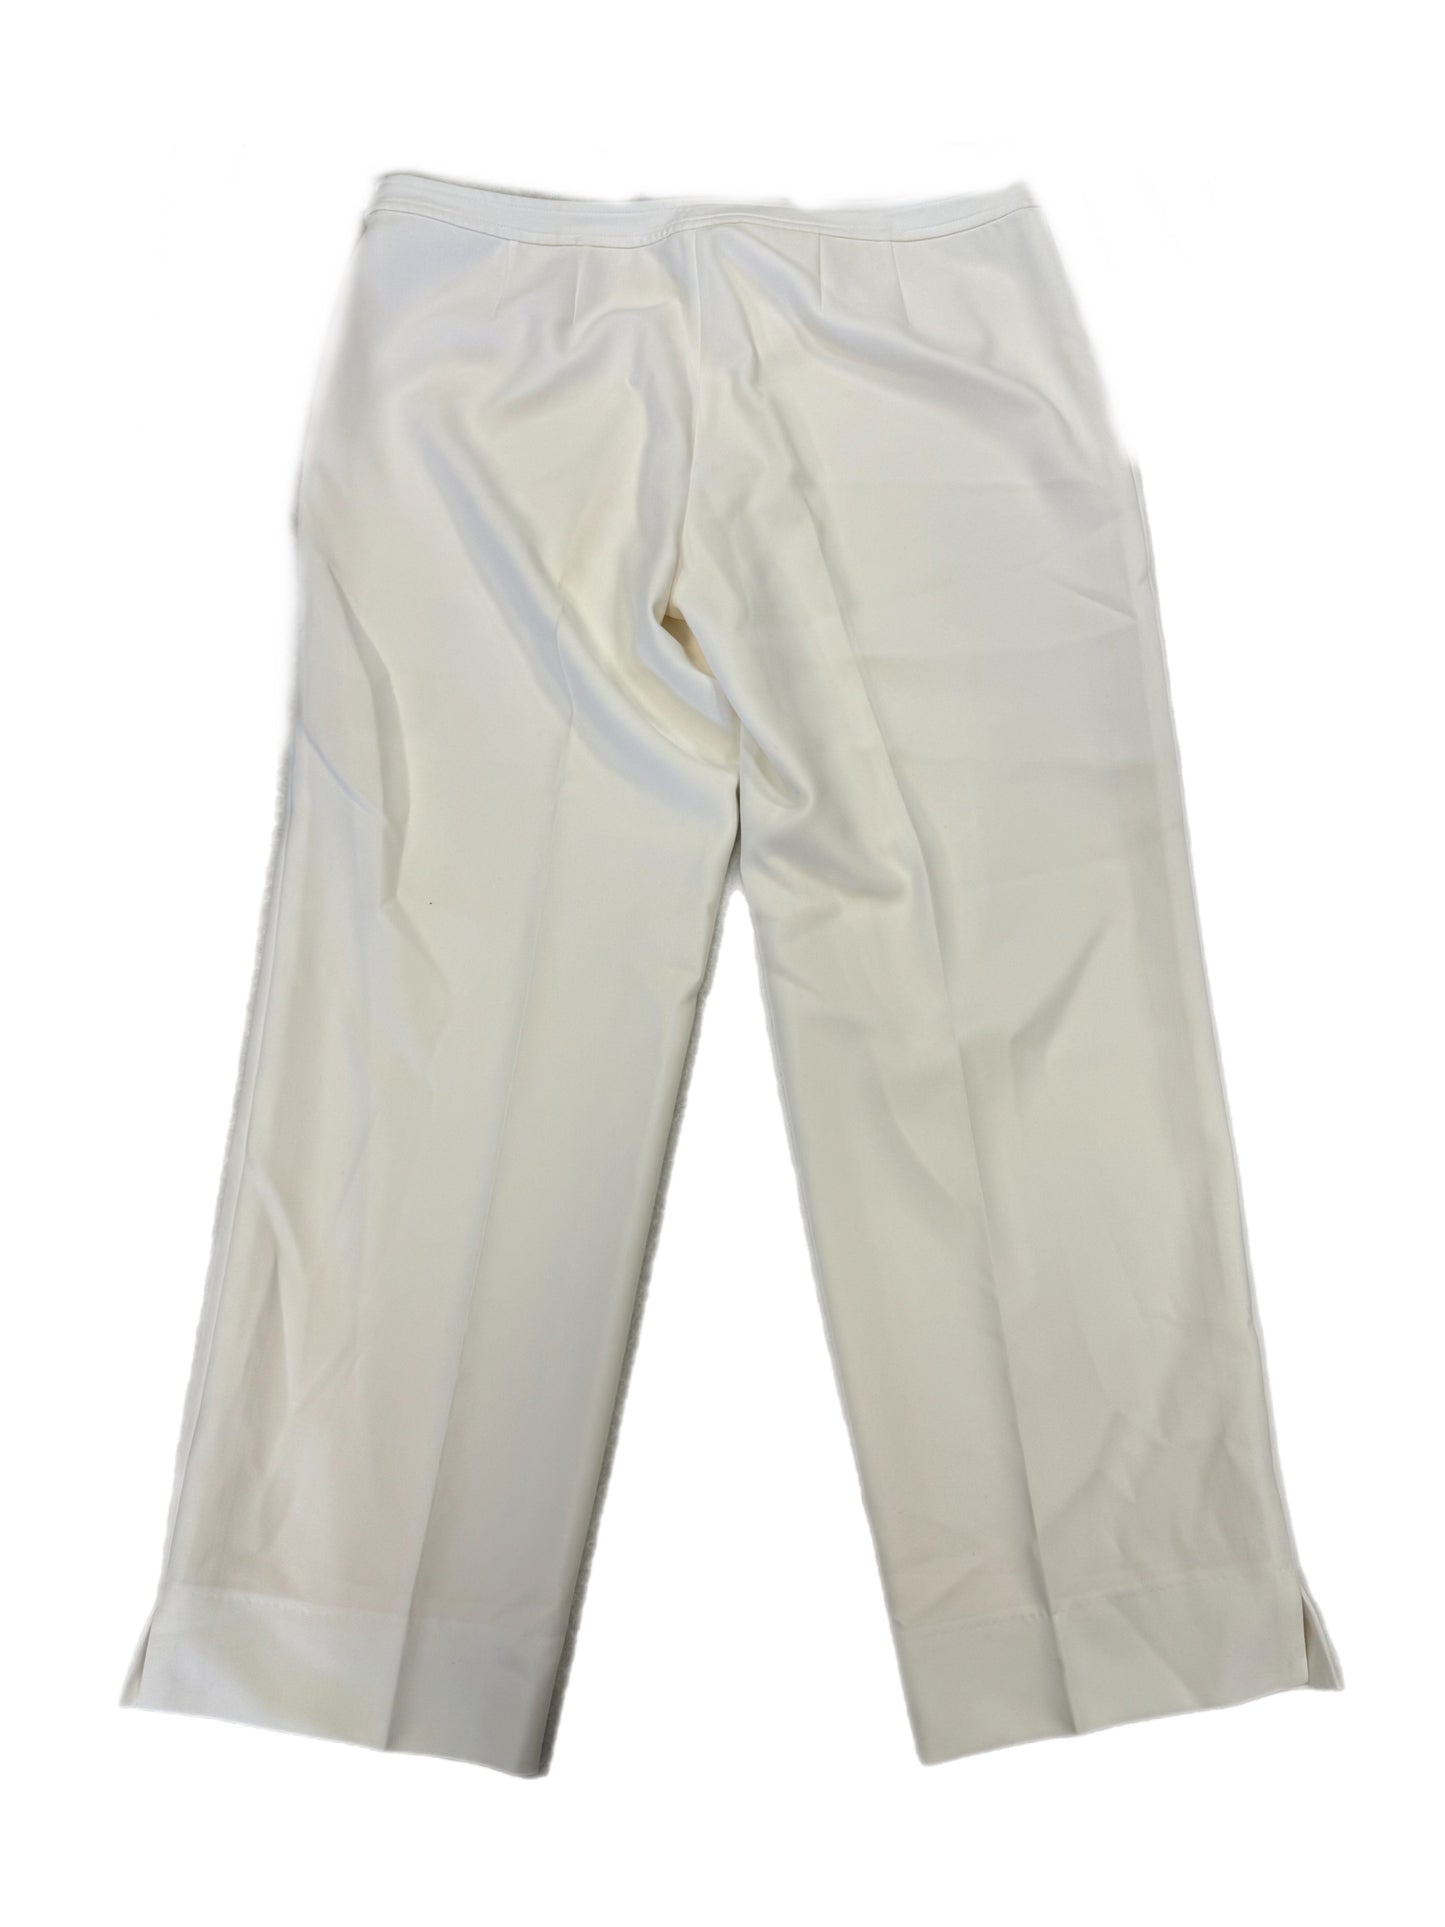 Pants Dress By St John Collection  Size: 14